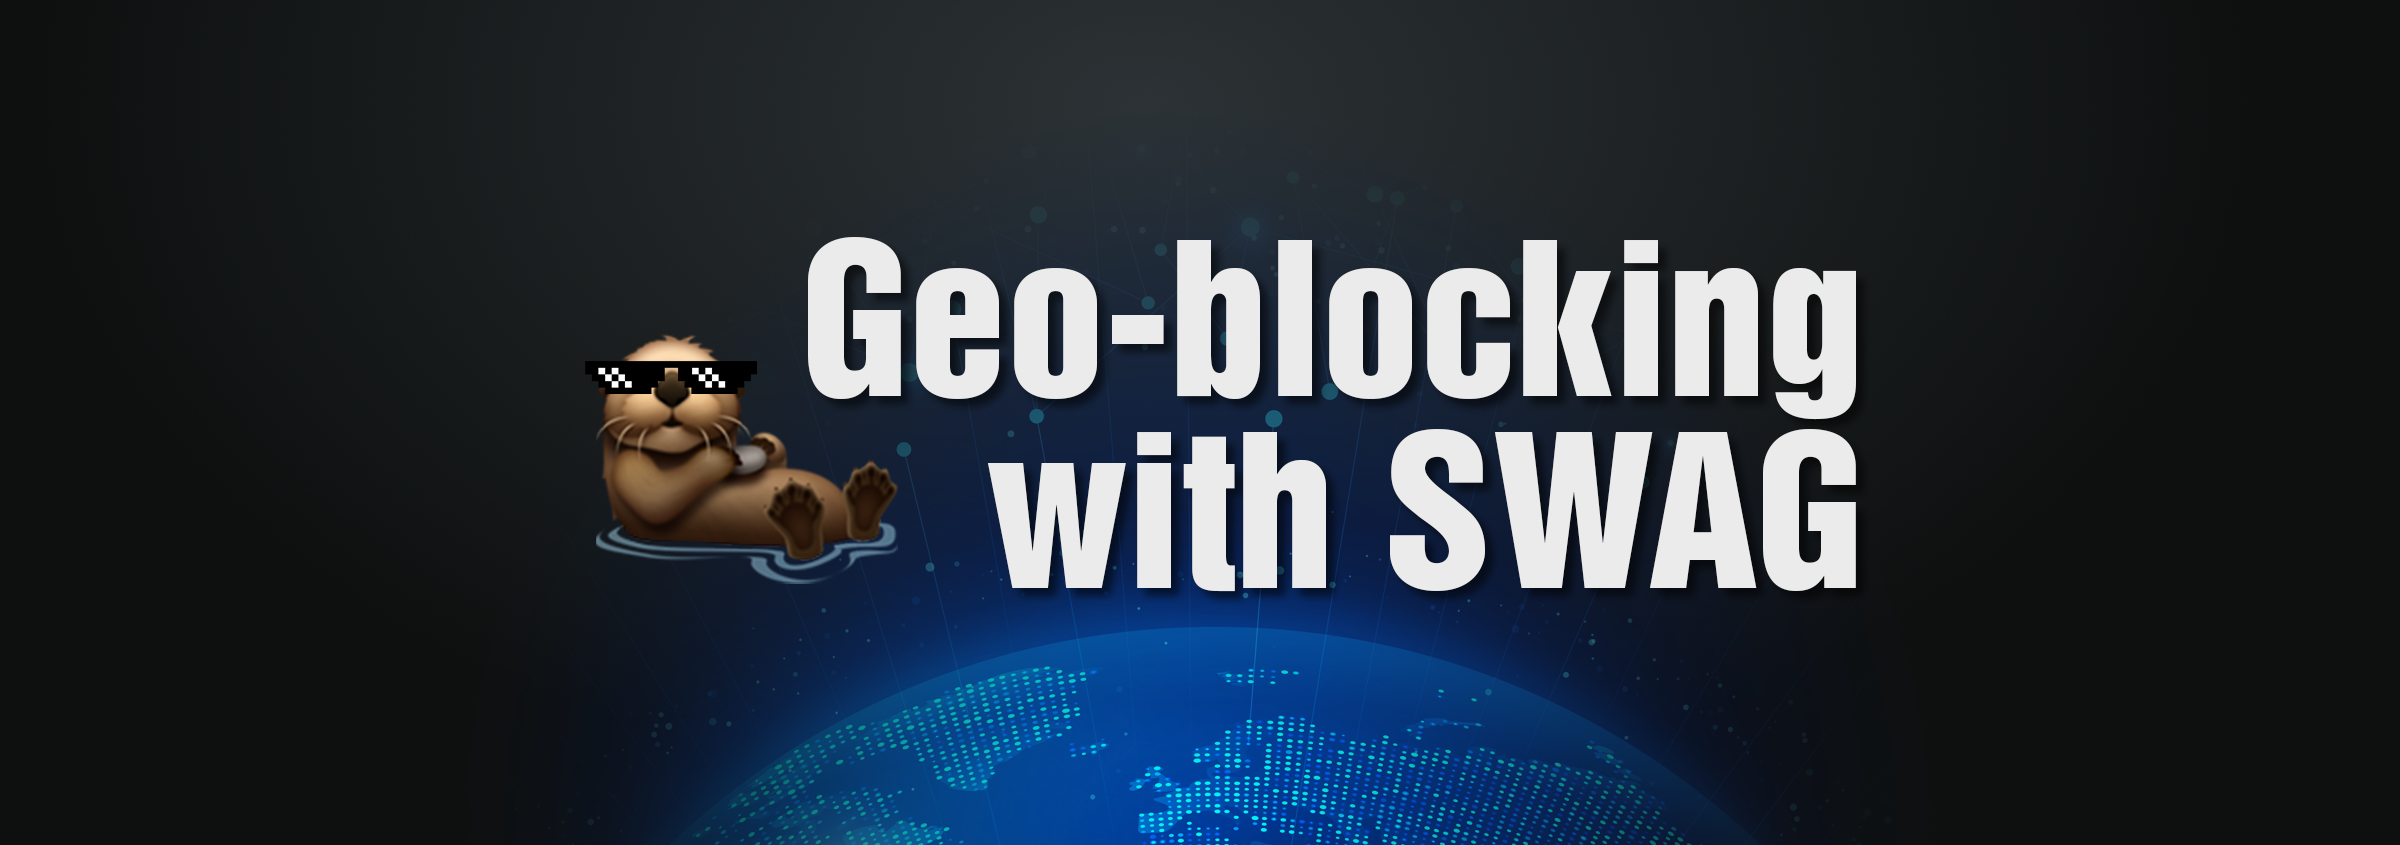 Geo-blocking with SWAG